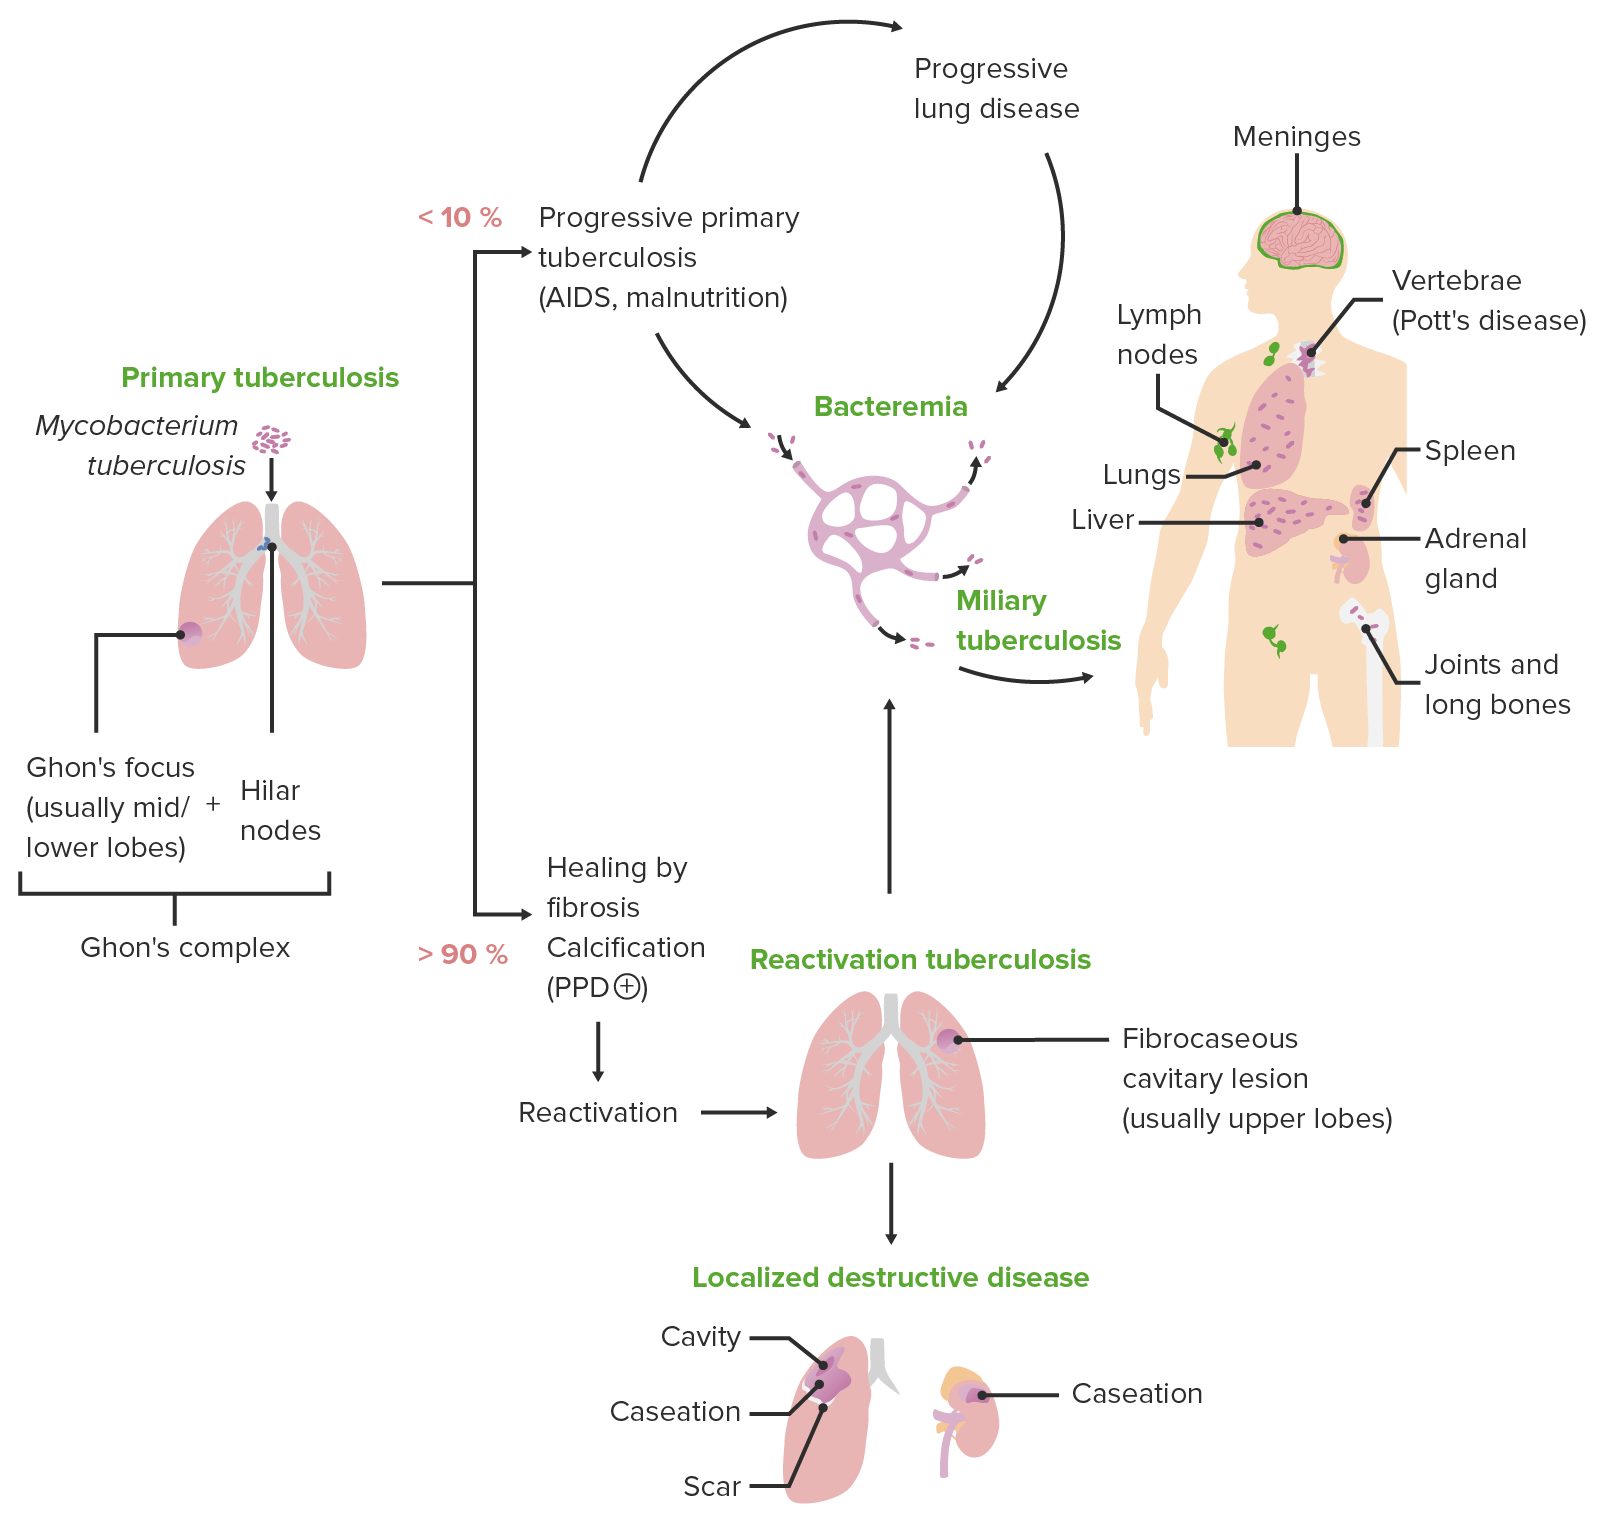 Life cycle of Tuberculosis